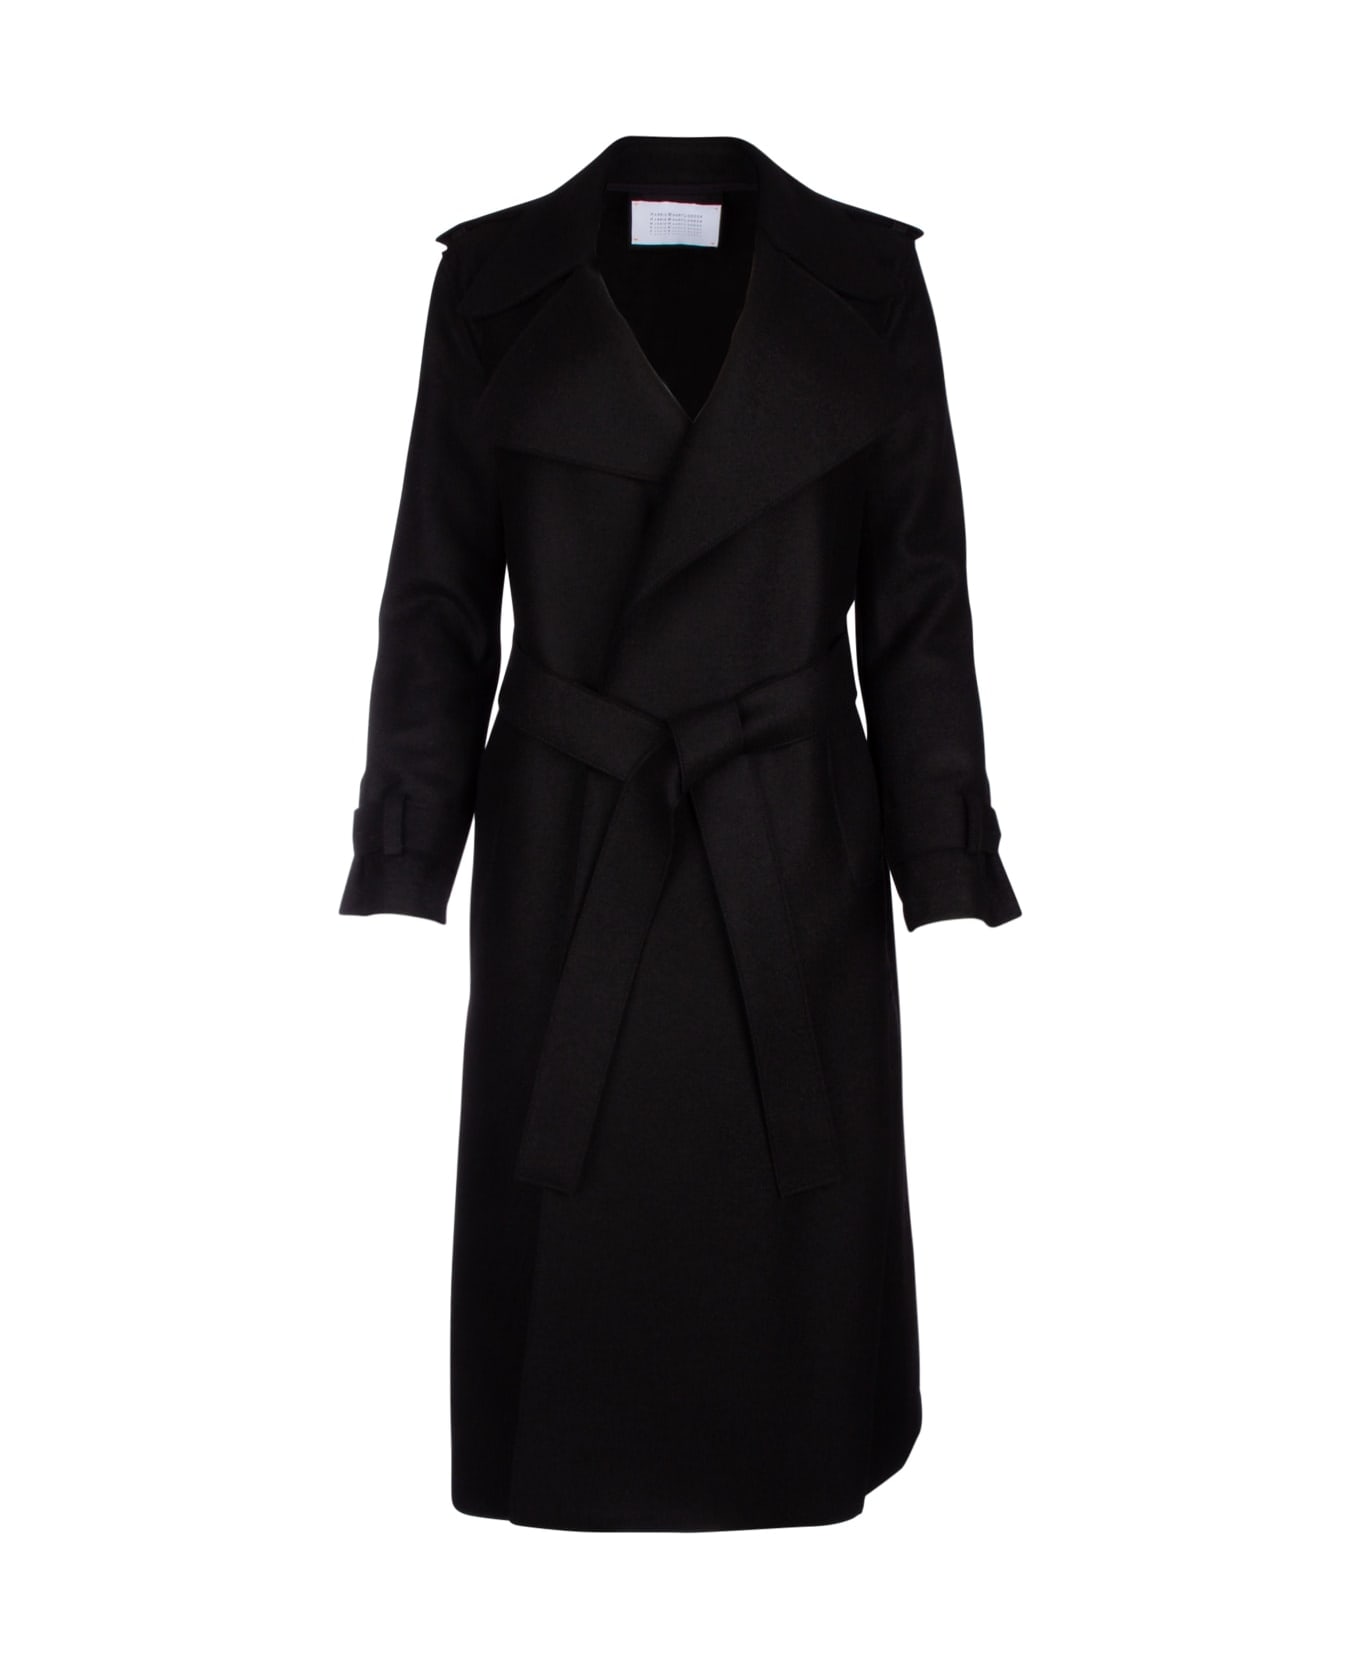 Harris Wharf London Women Double Vent Trench Coat Light Pressed Wool - Black